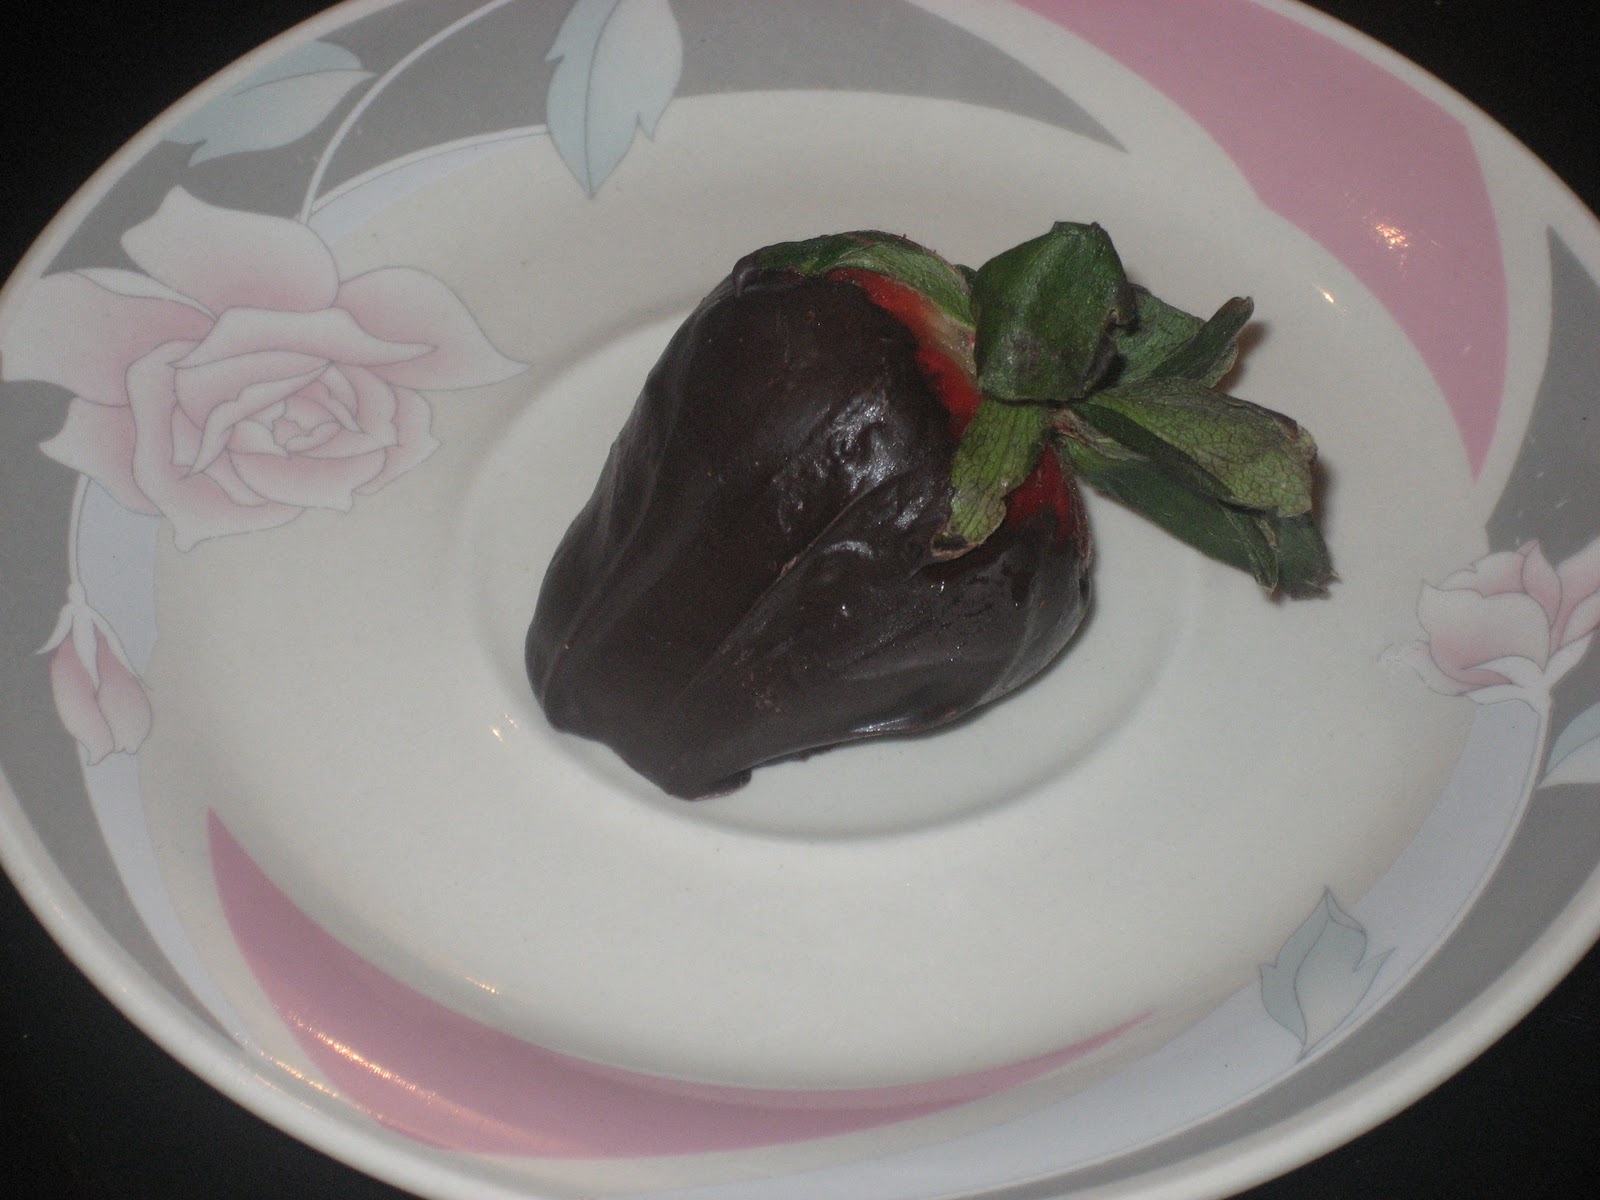 Vegetarian Food and Health: Chocolate covered strawberries, pineapple